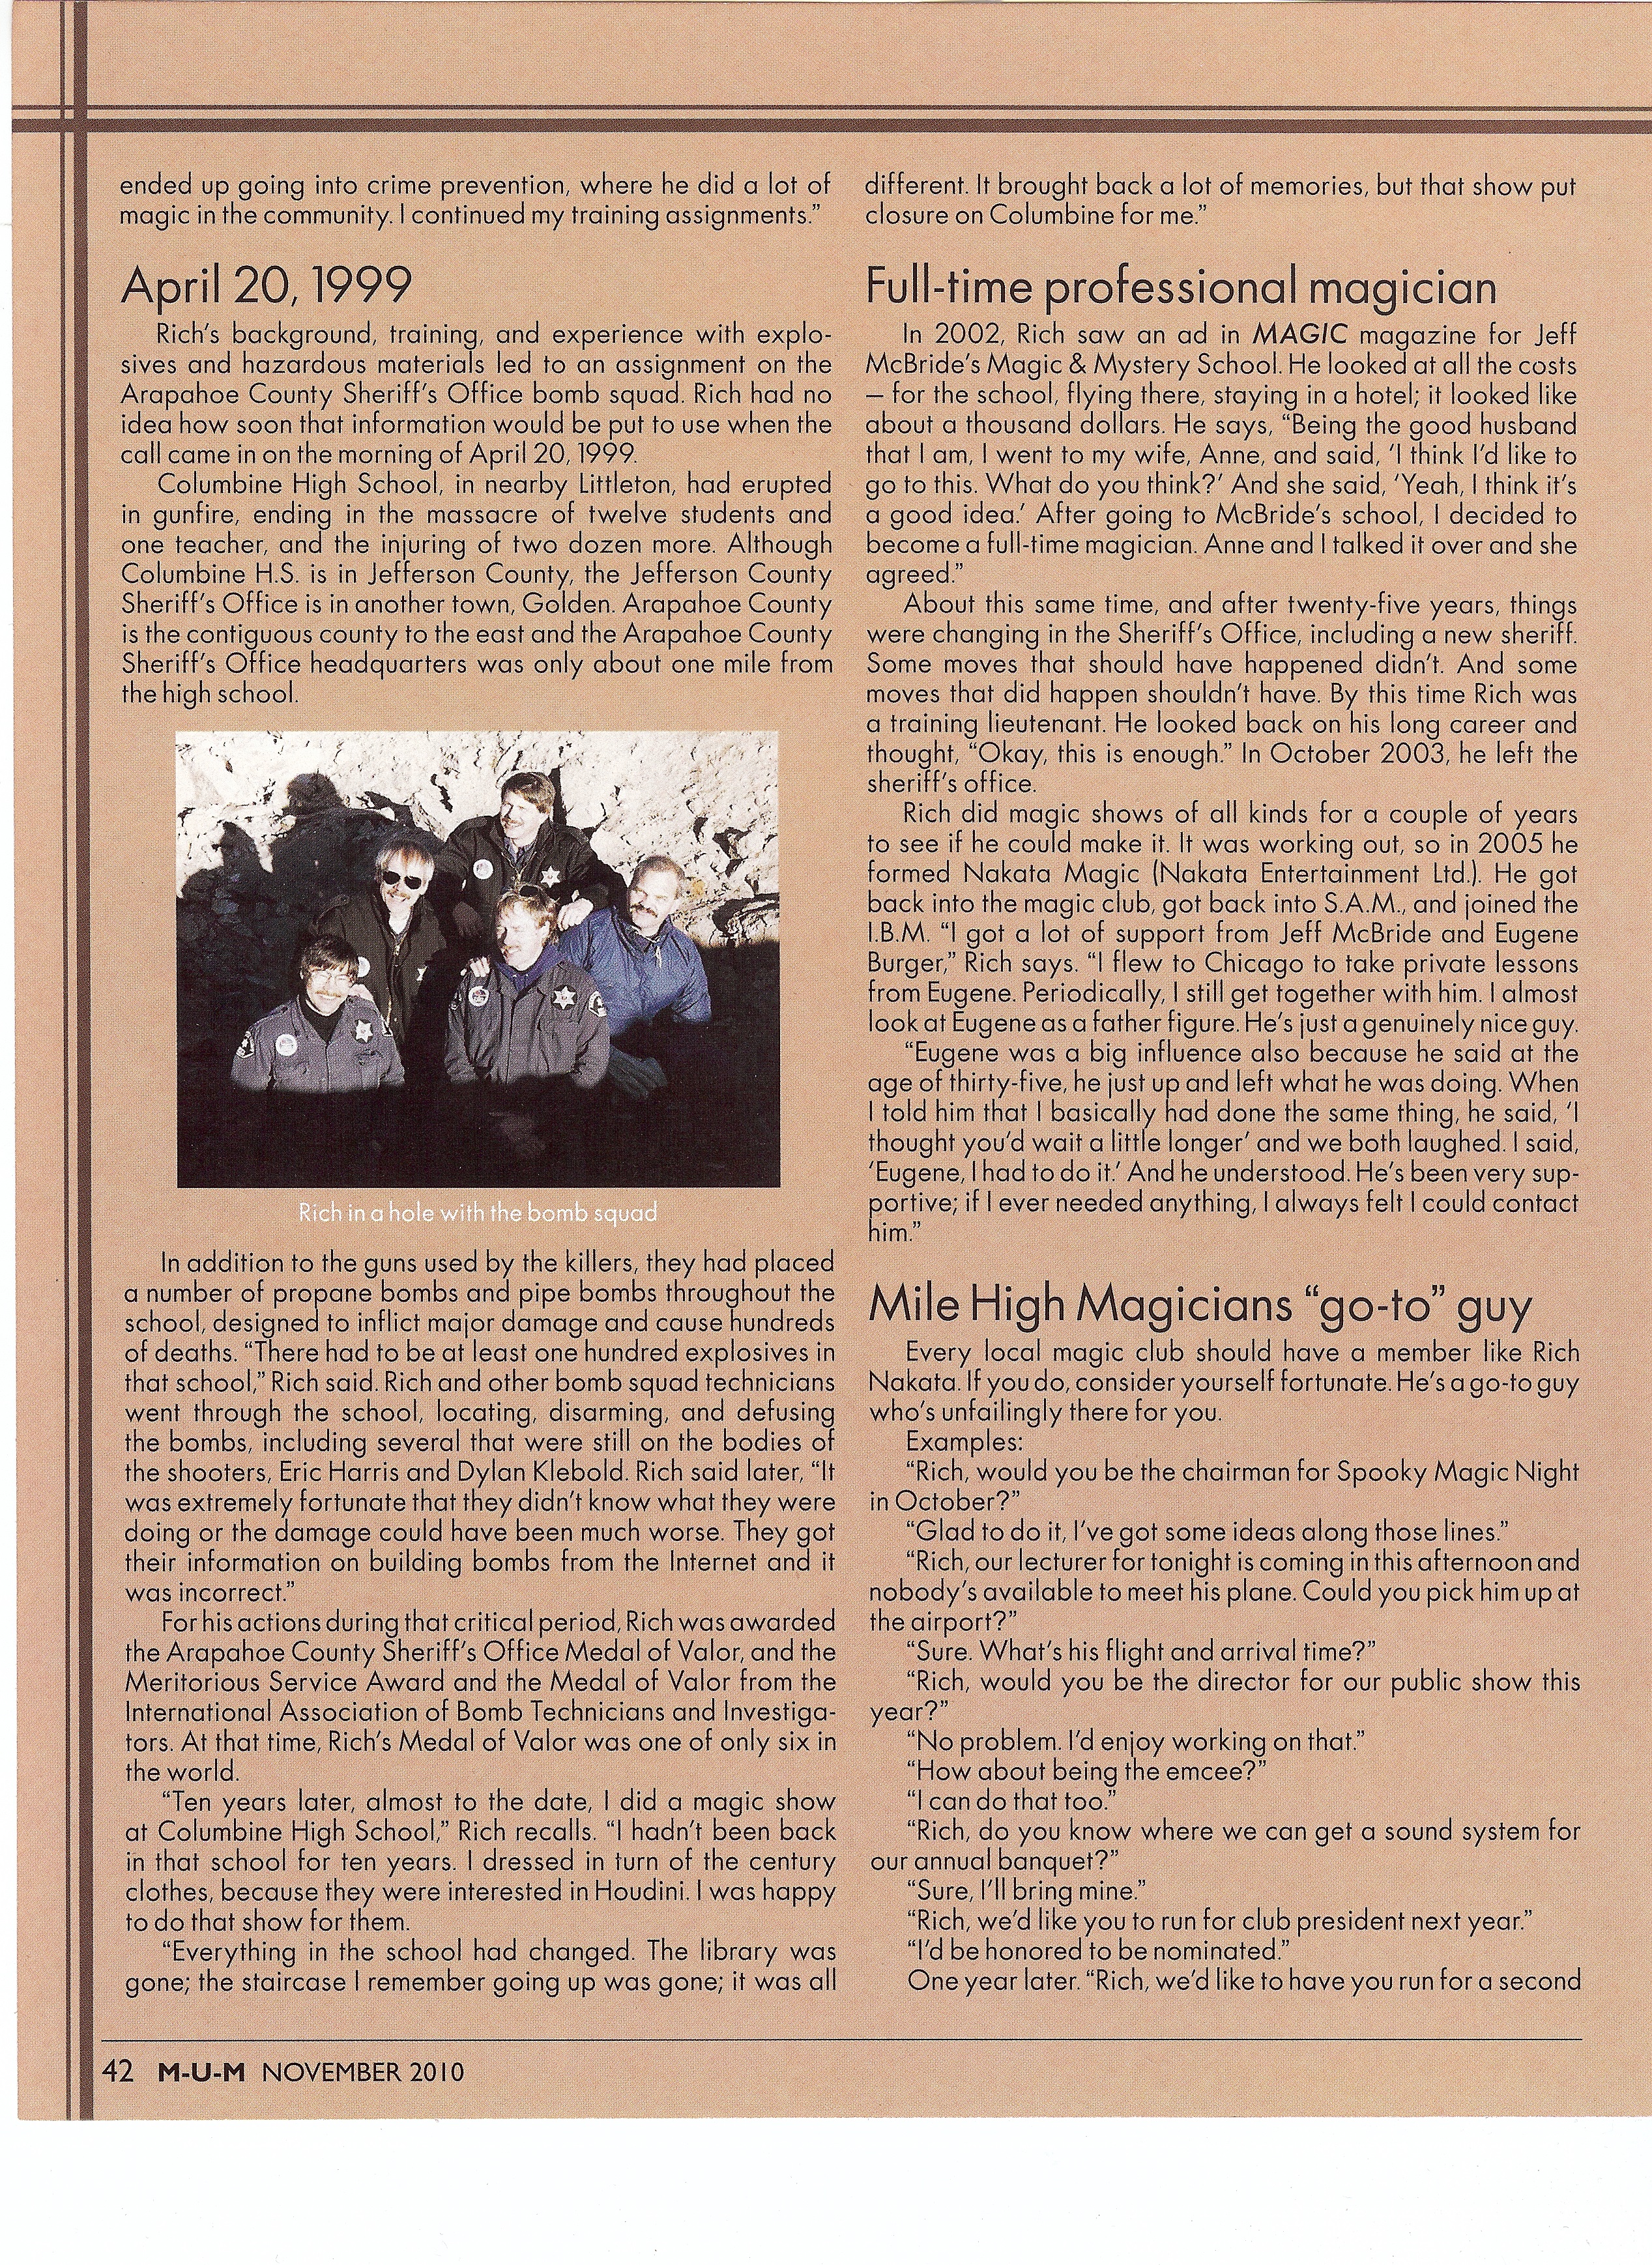 Magic Unity Might Magazine: Richard Nakata page 5